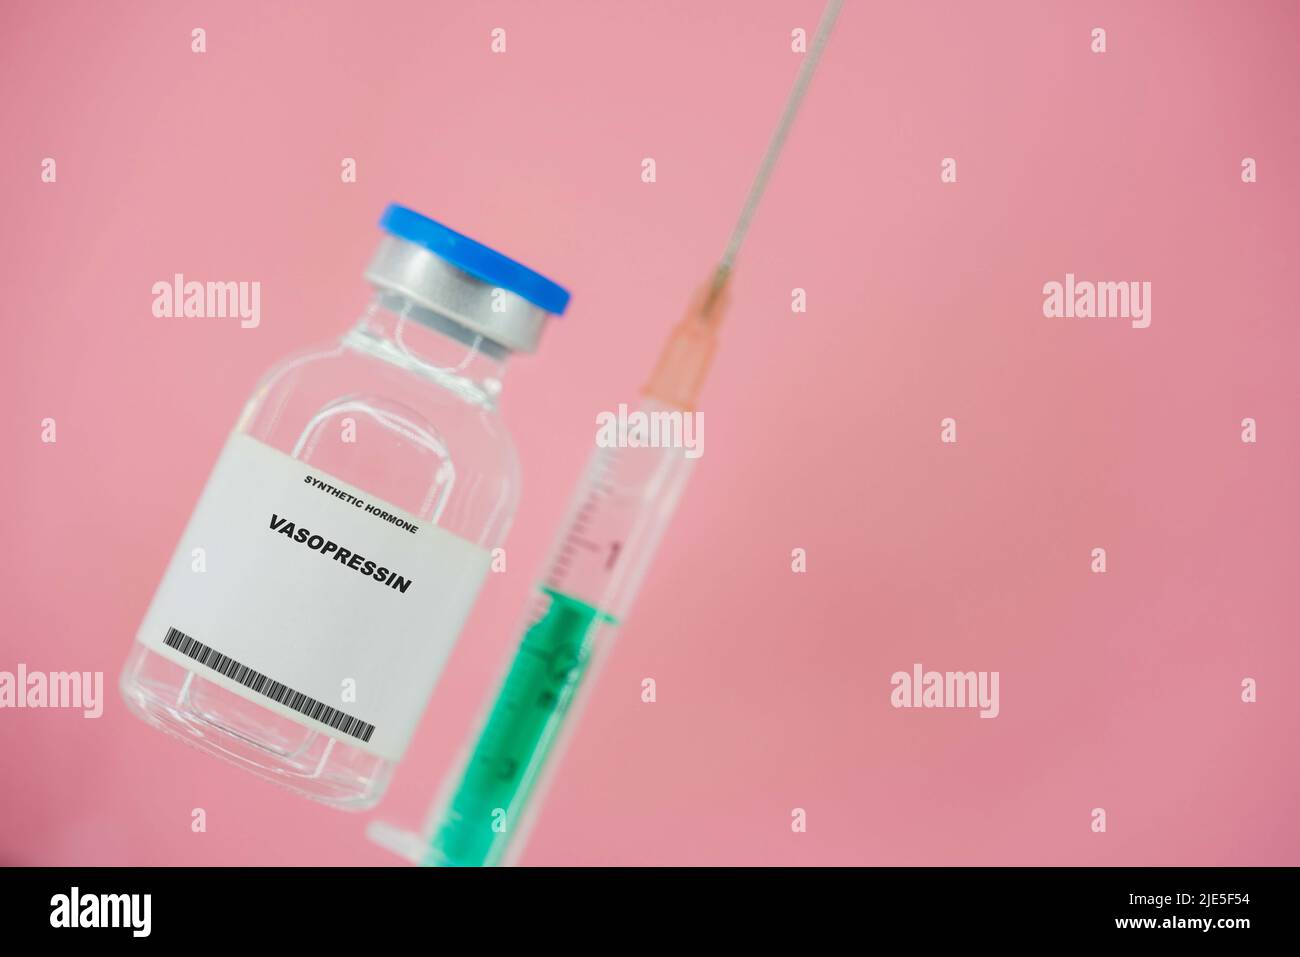 Vasopressin. Test tube with artificial hormone on pink background Vasopressin Stock Photo